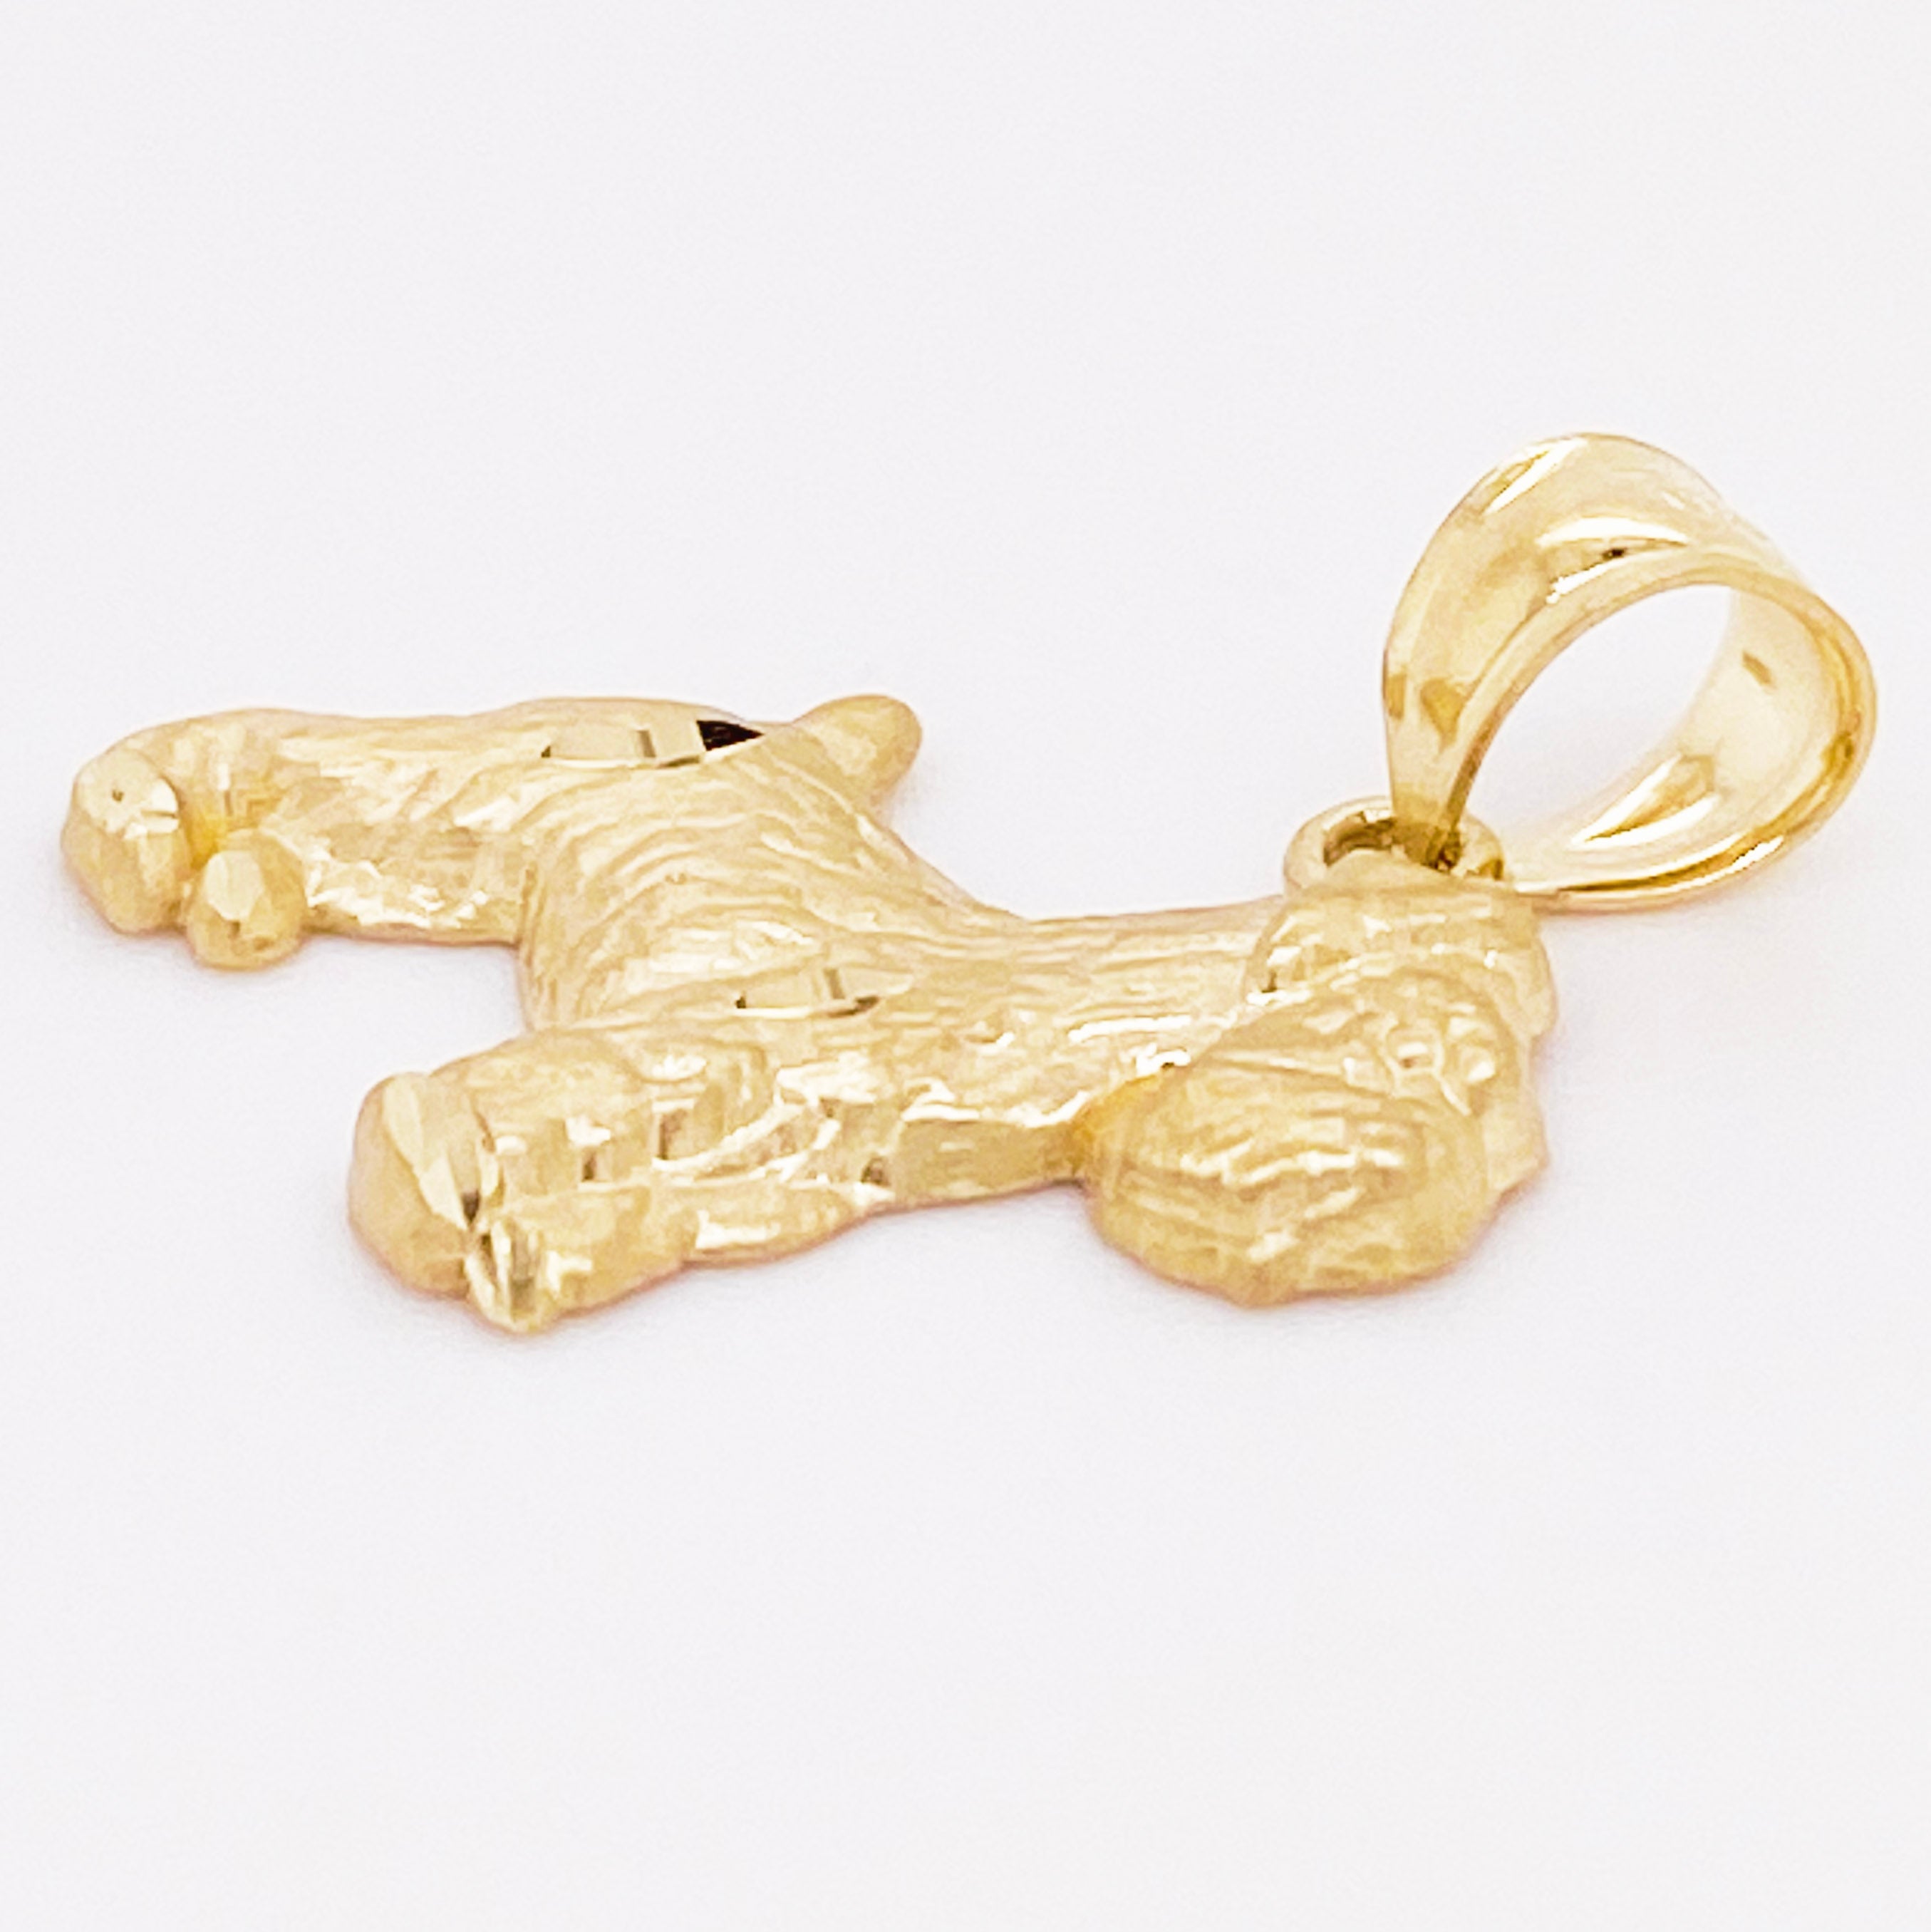 Schnauzer Dog Pendant in 14K Gold